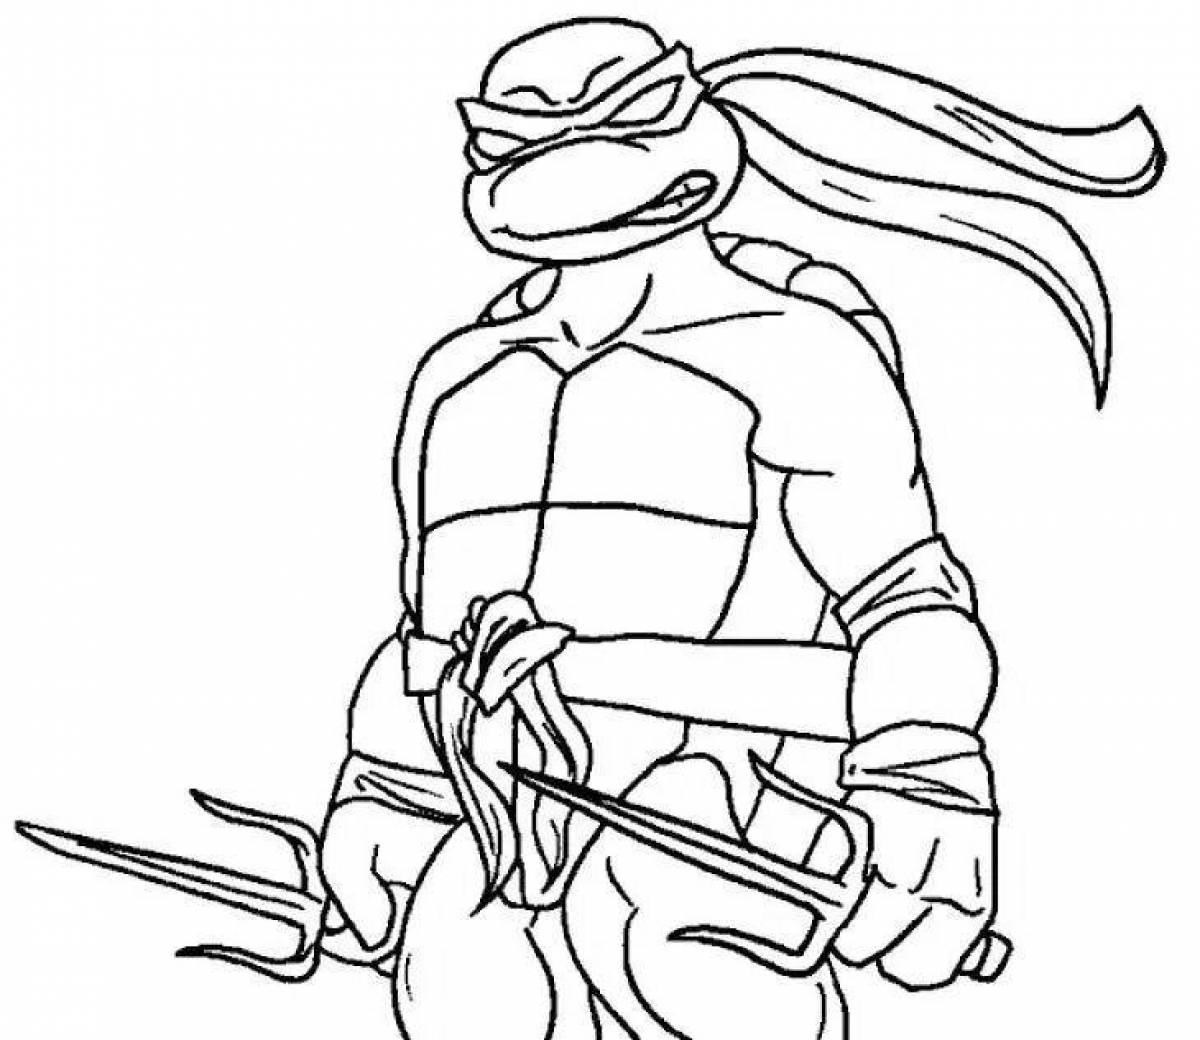 Raphael's Dynamic Teenage Mutant Ninja Turtles coloring book